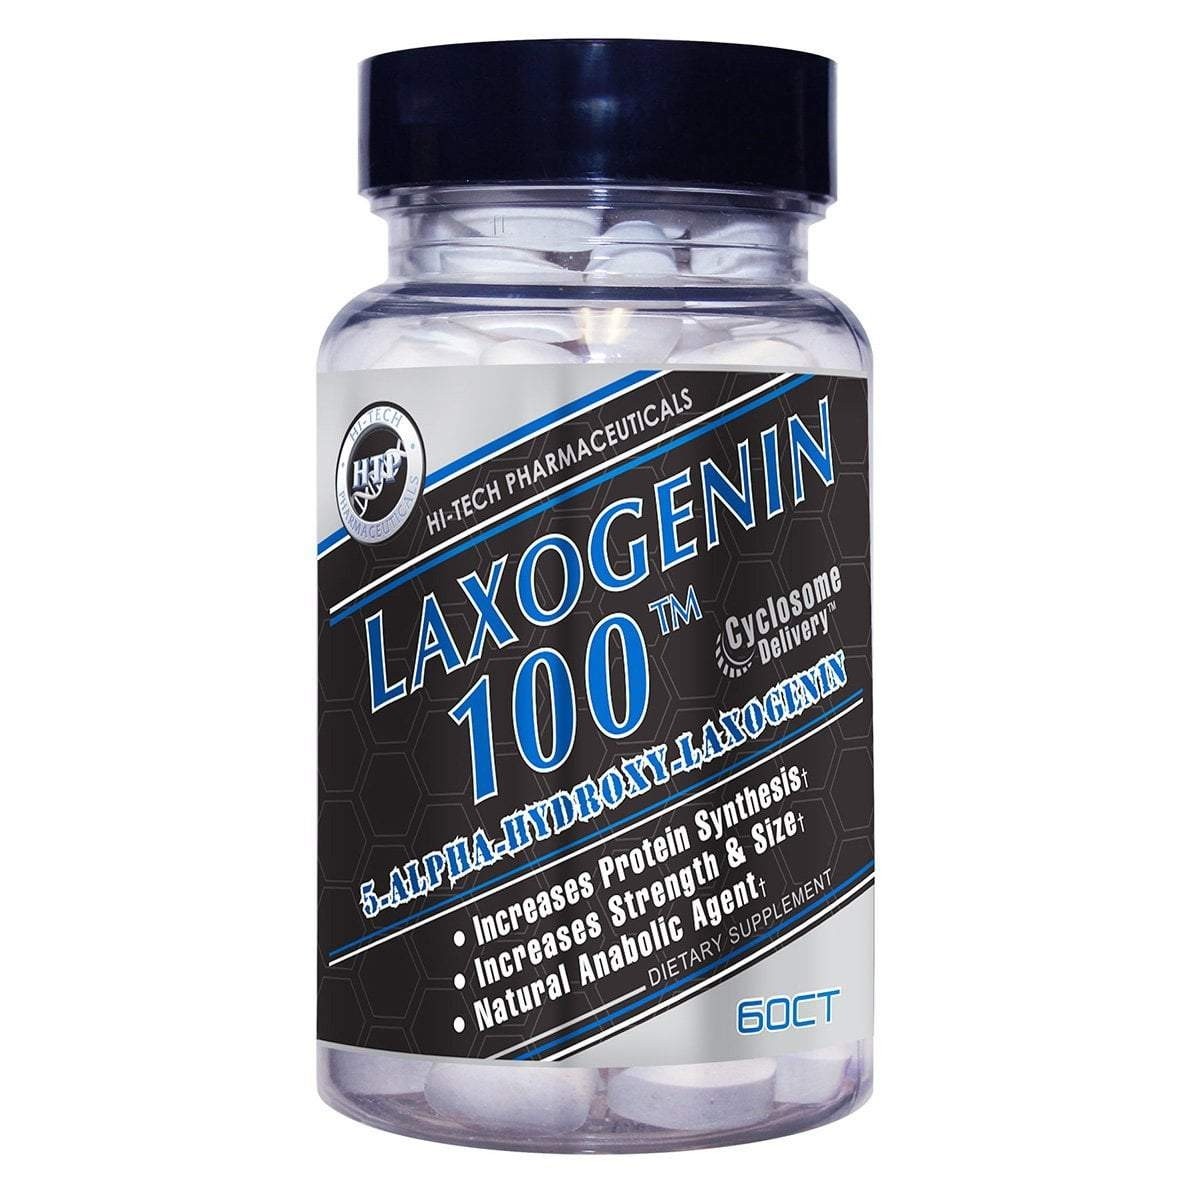 Hi-Tech Pharmaceuticals - Laxogenin 100